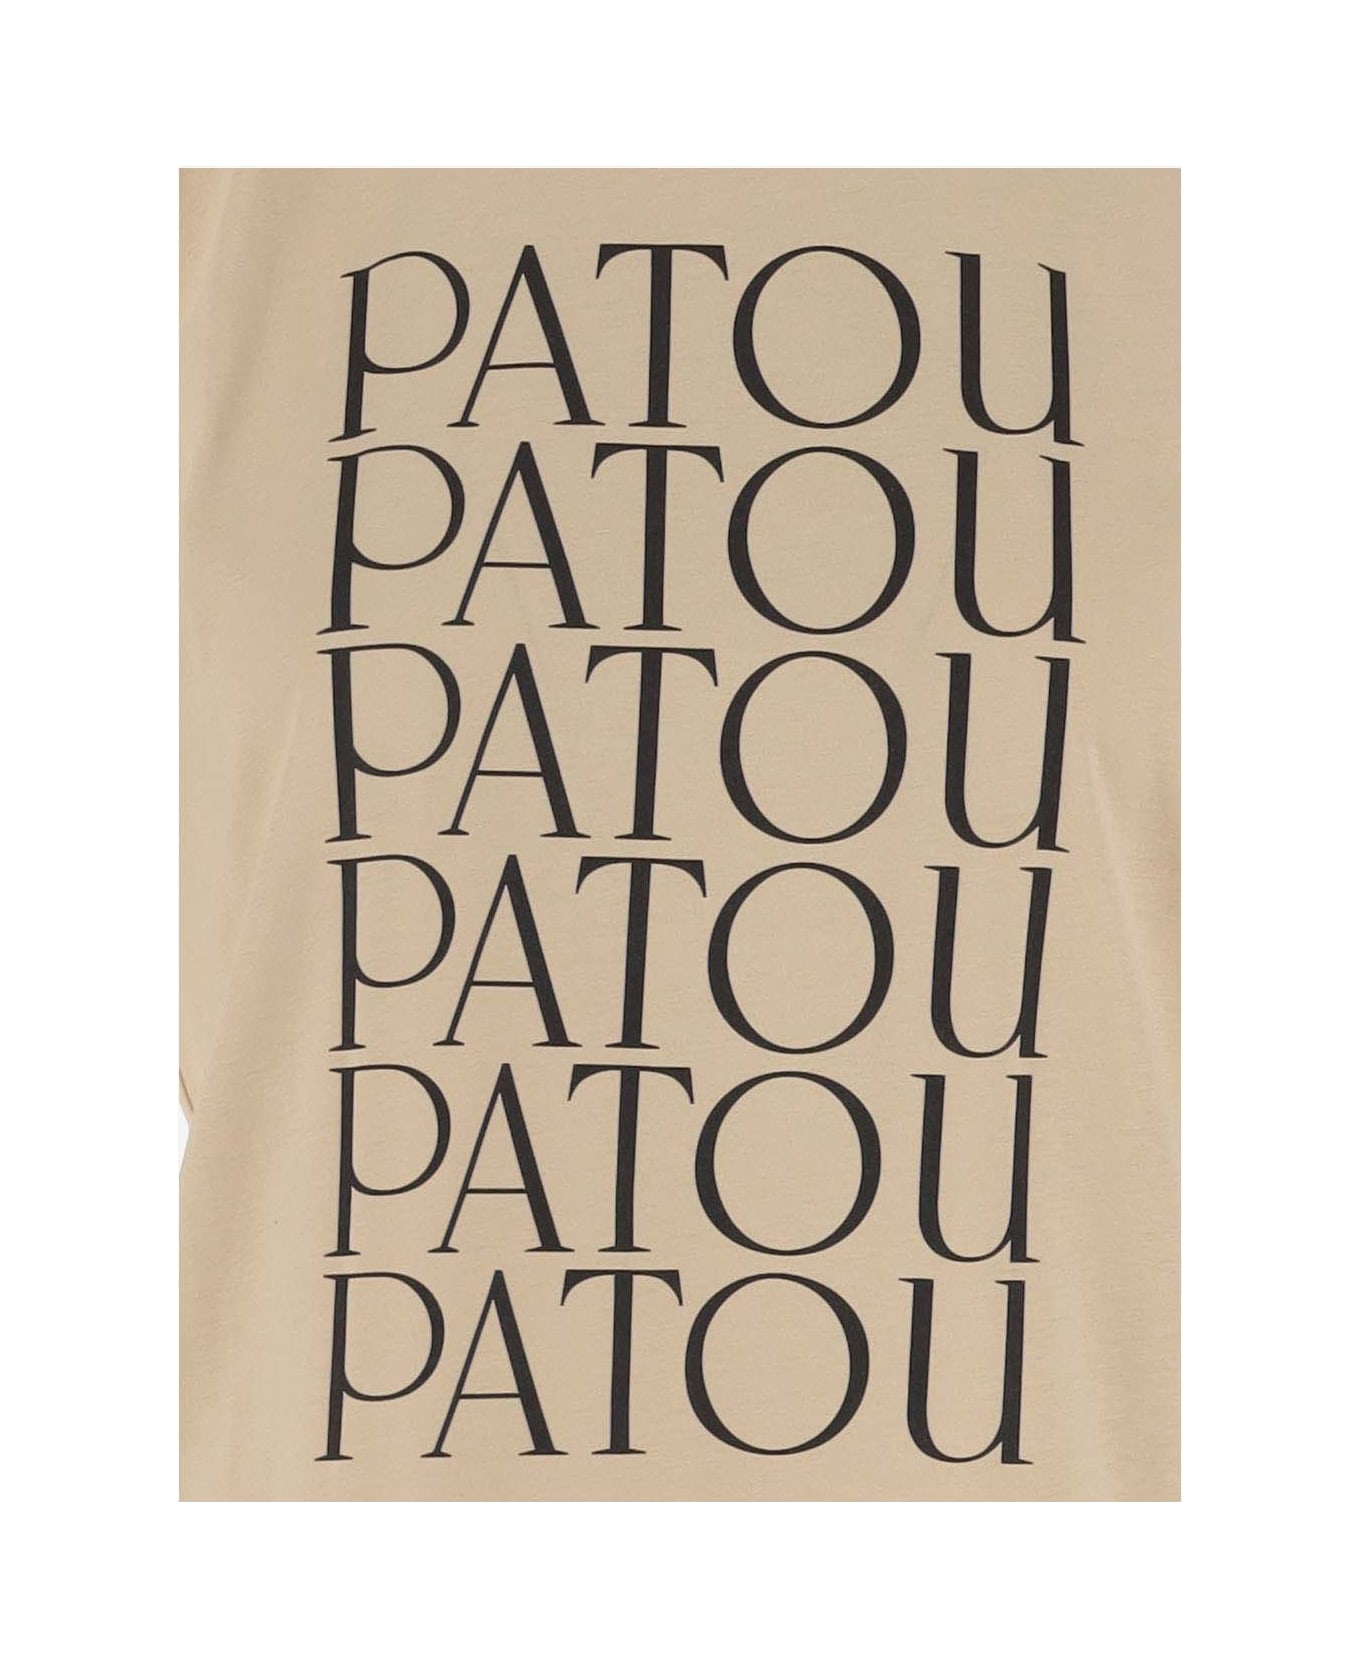 Patou Cotton T-shirt With Logo - Beige Tシャツ